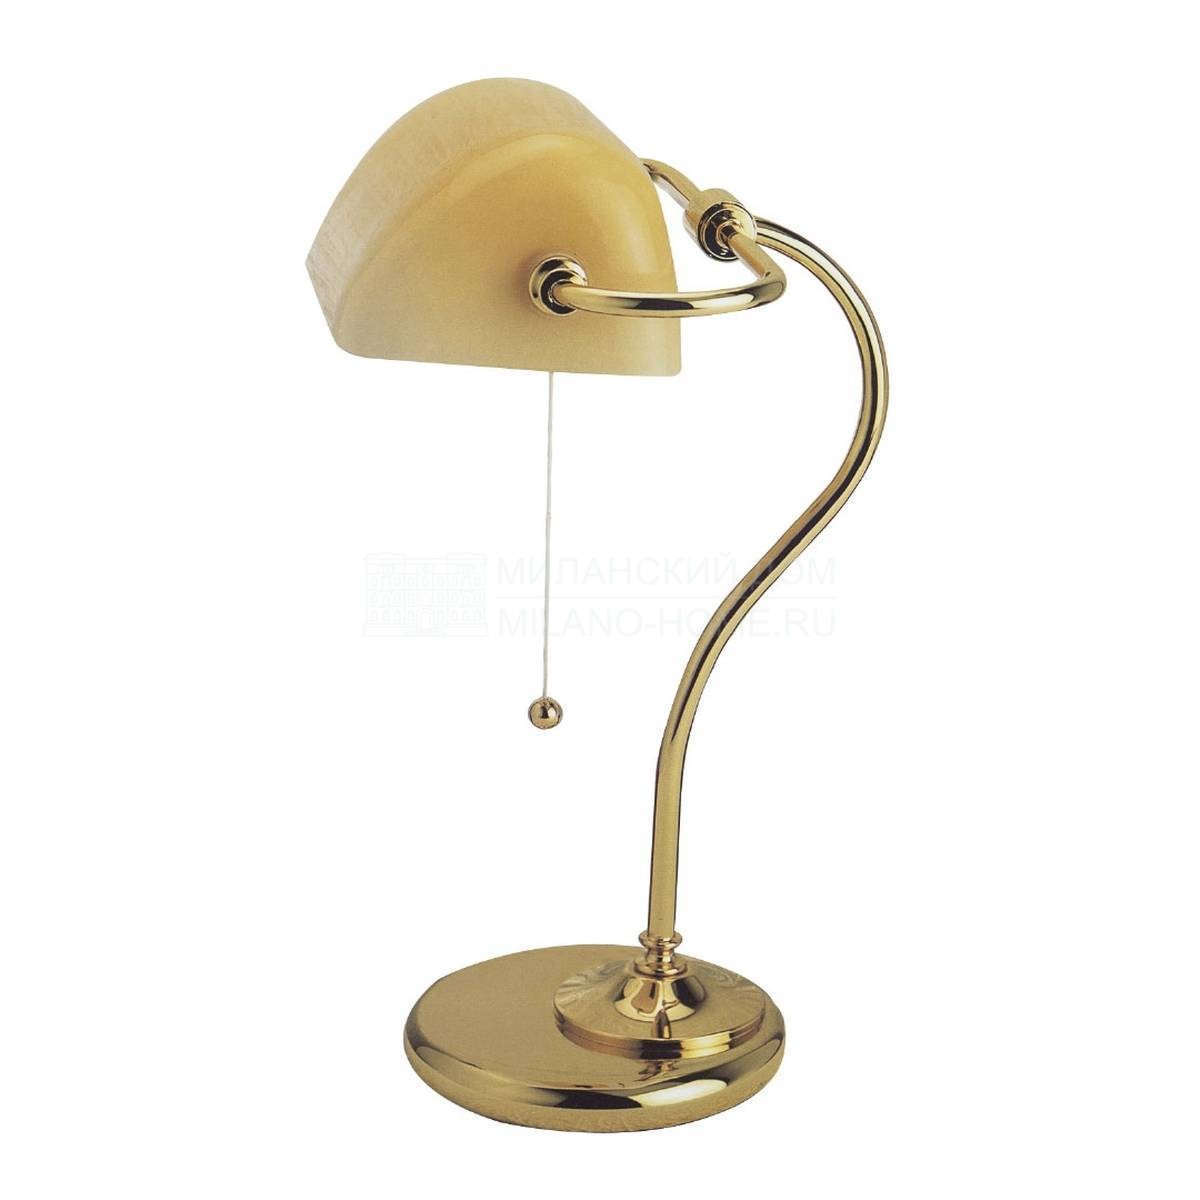 Настольная лампа LINCOLN Art. n 60 LA из Италии фабрики CAROTI